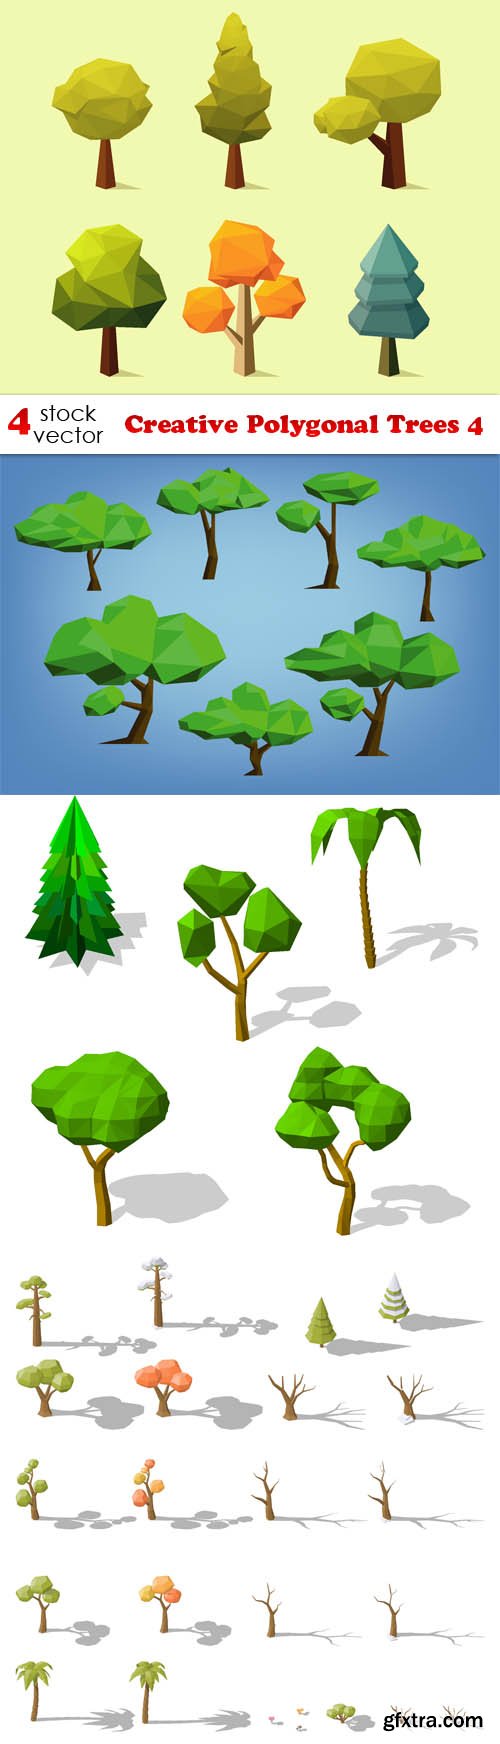 Vectors - Creative Polygonal Trees 4